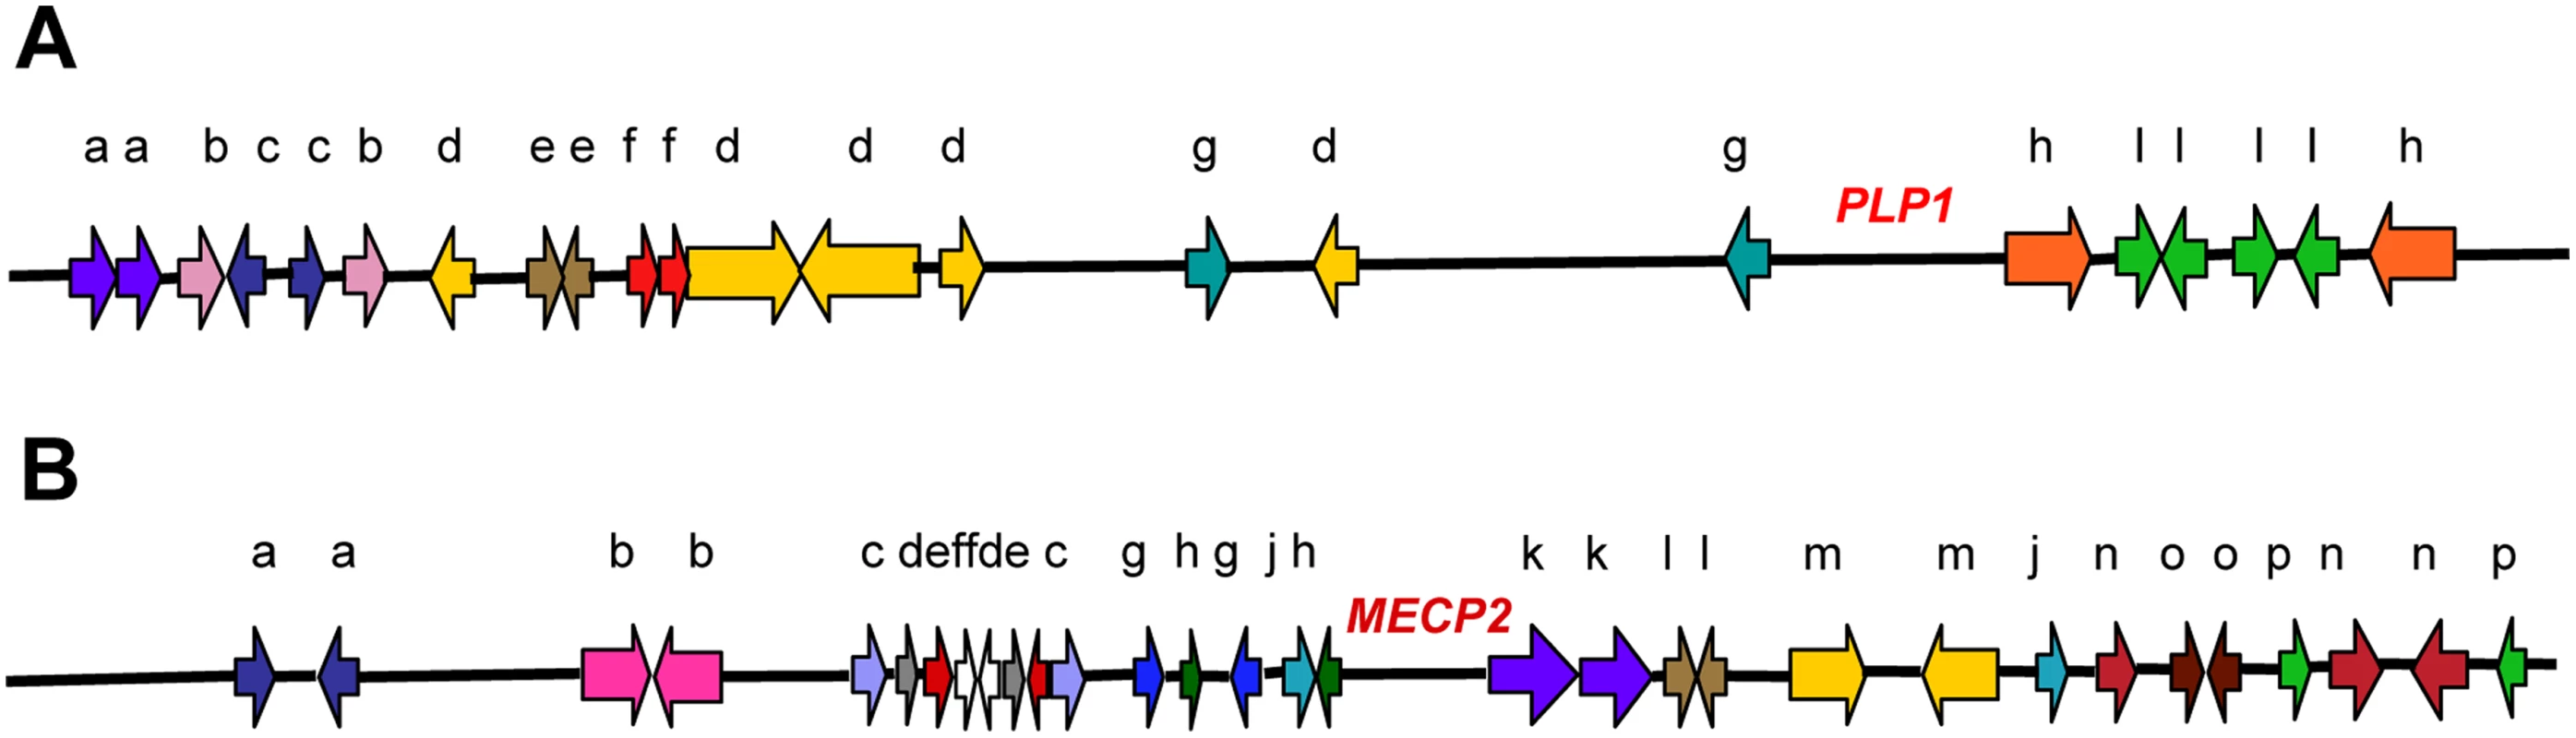 In silico analyses revealed complex genomic architecture in regions of nonrecurrent rearrangement.